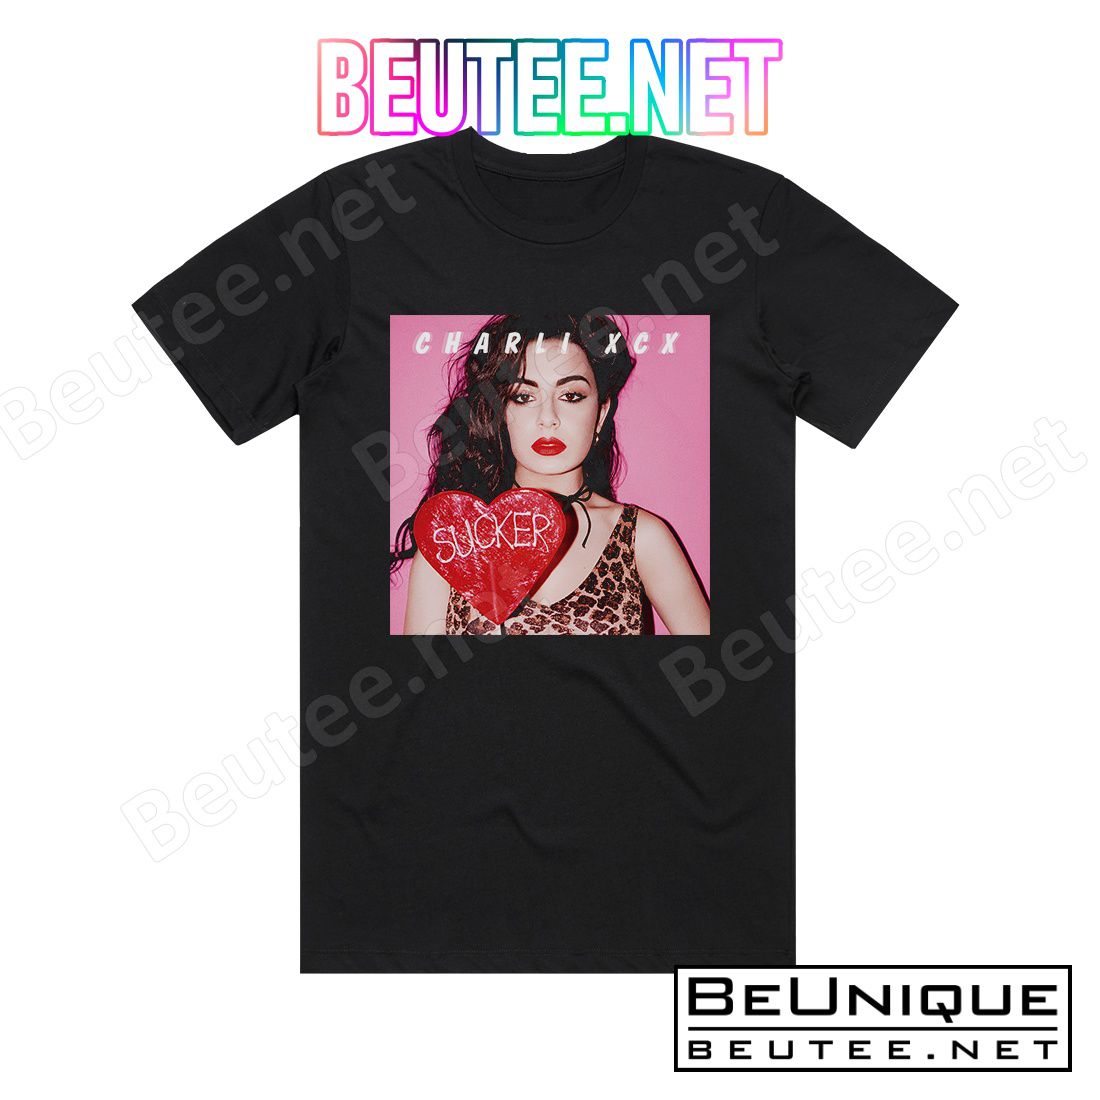 Charli XCX Sucker Album Cover T-Shirt